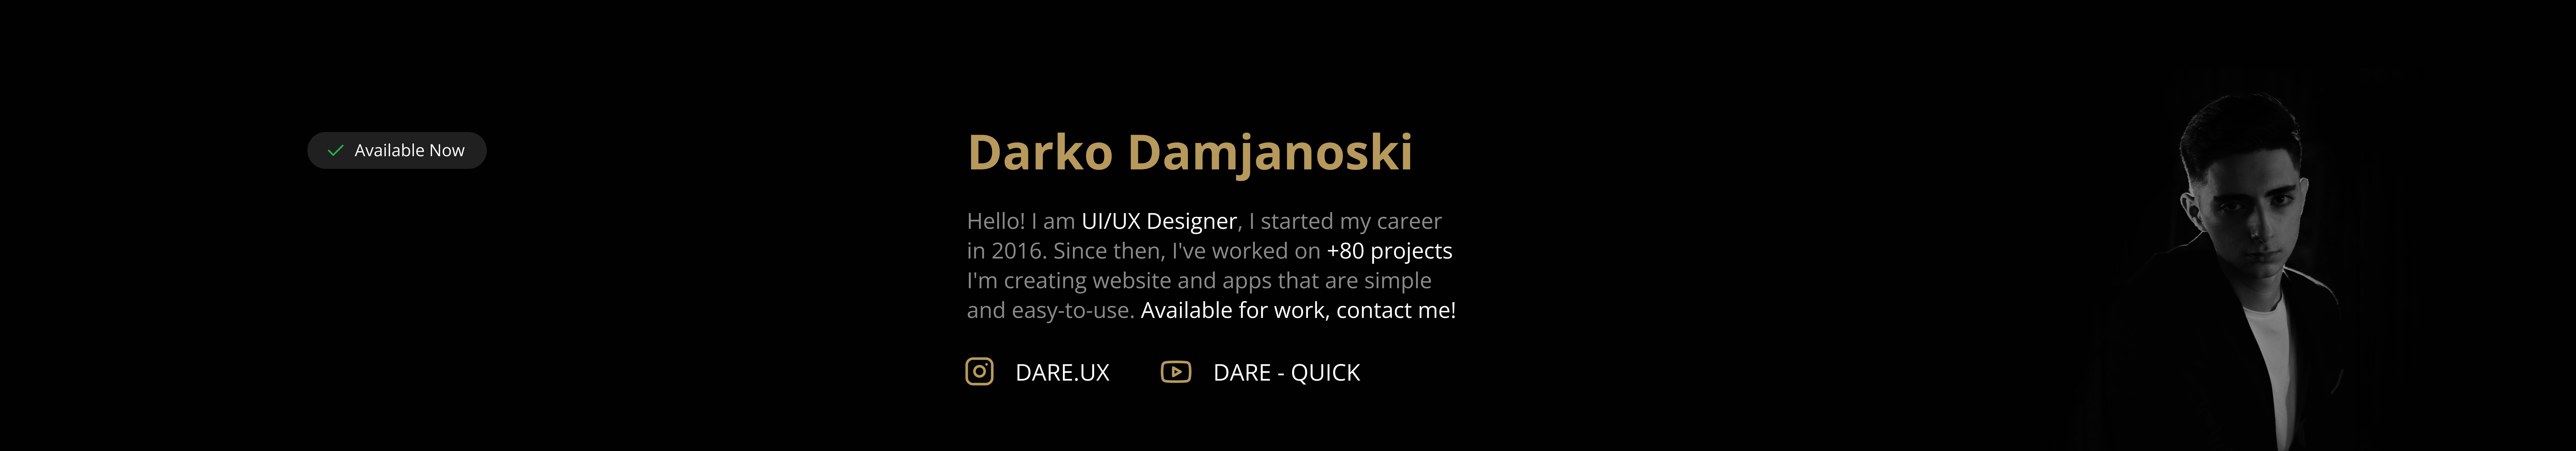 Baner profilu użytkownika Darko Damjanoski